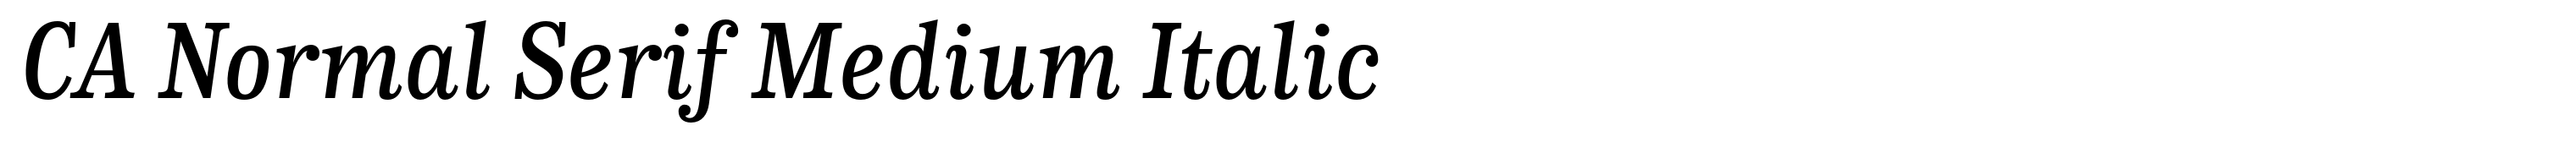 CA Normal Serif Medium Italic